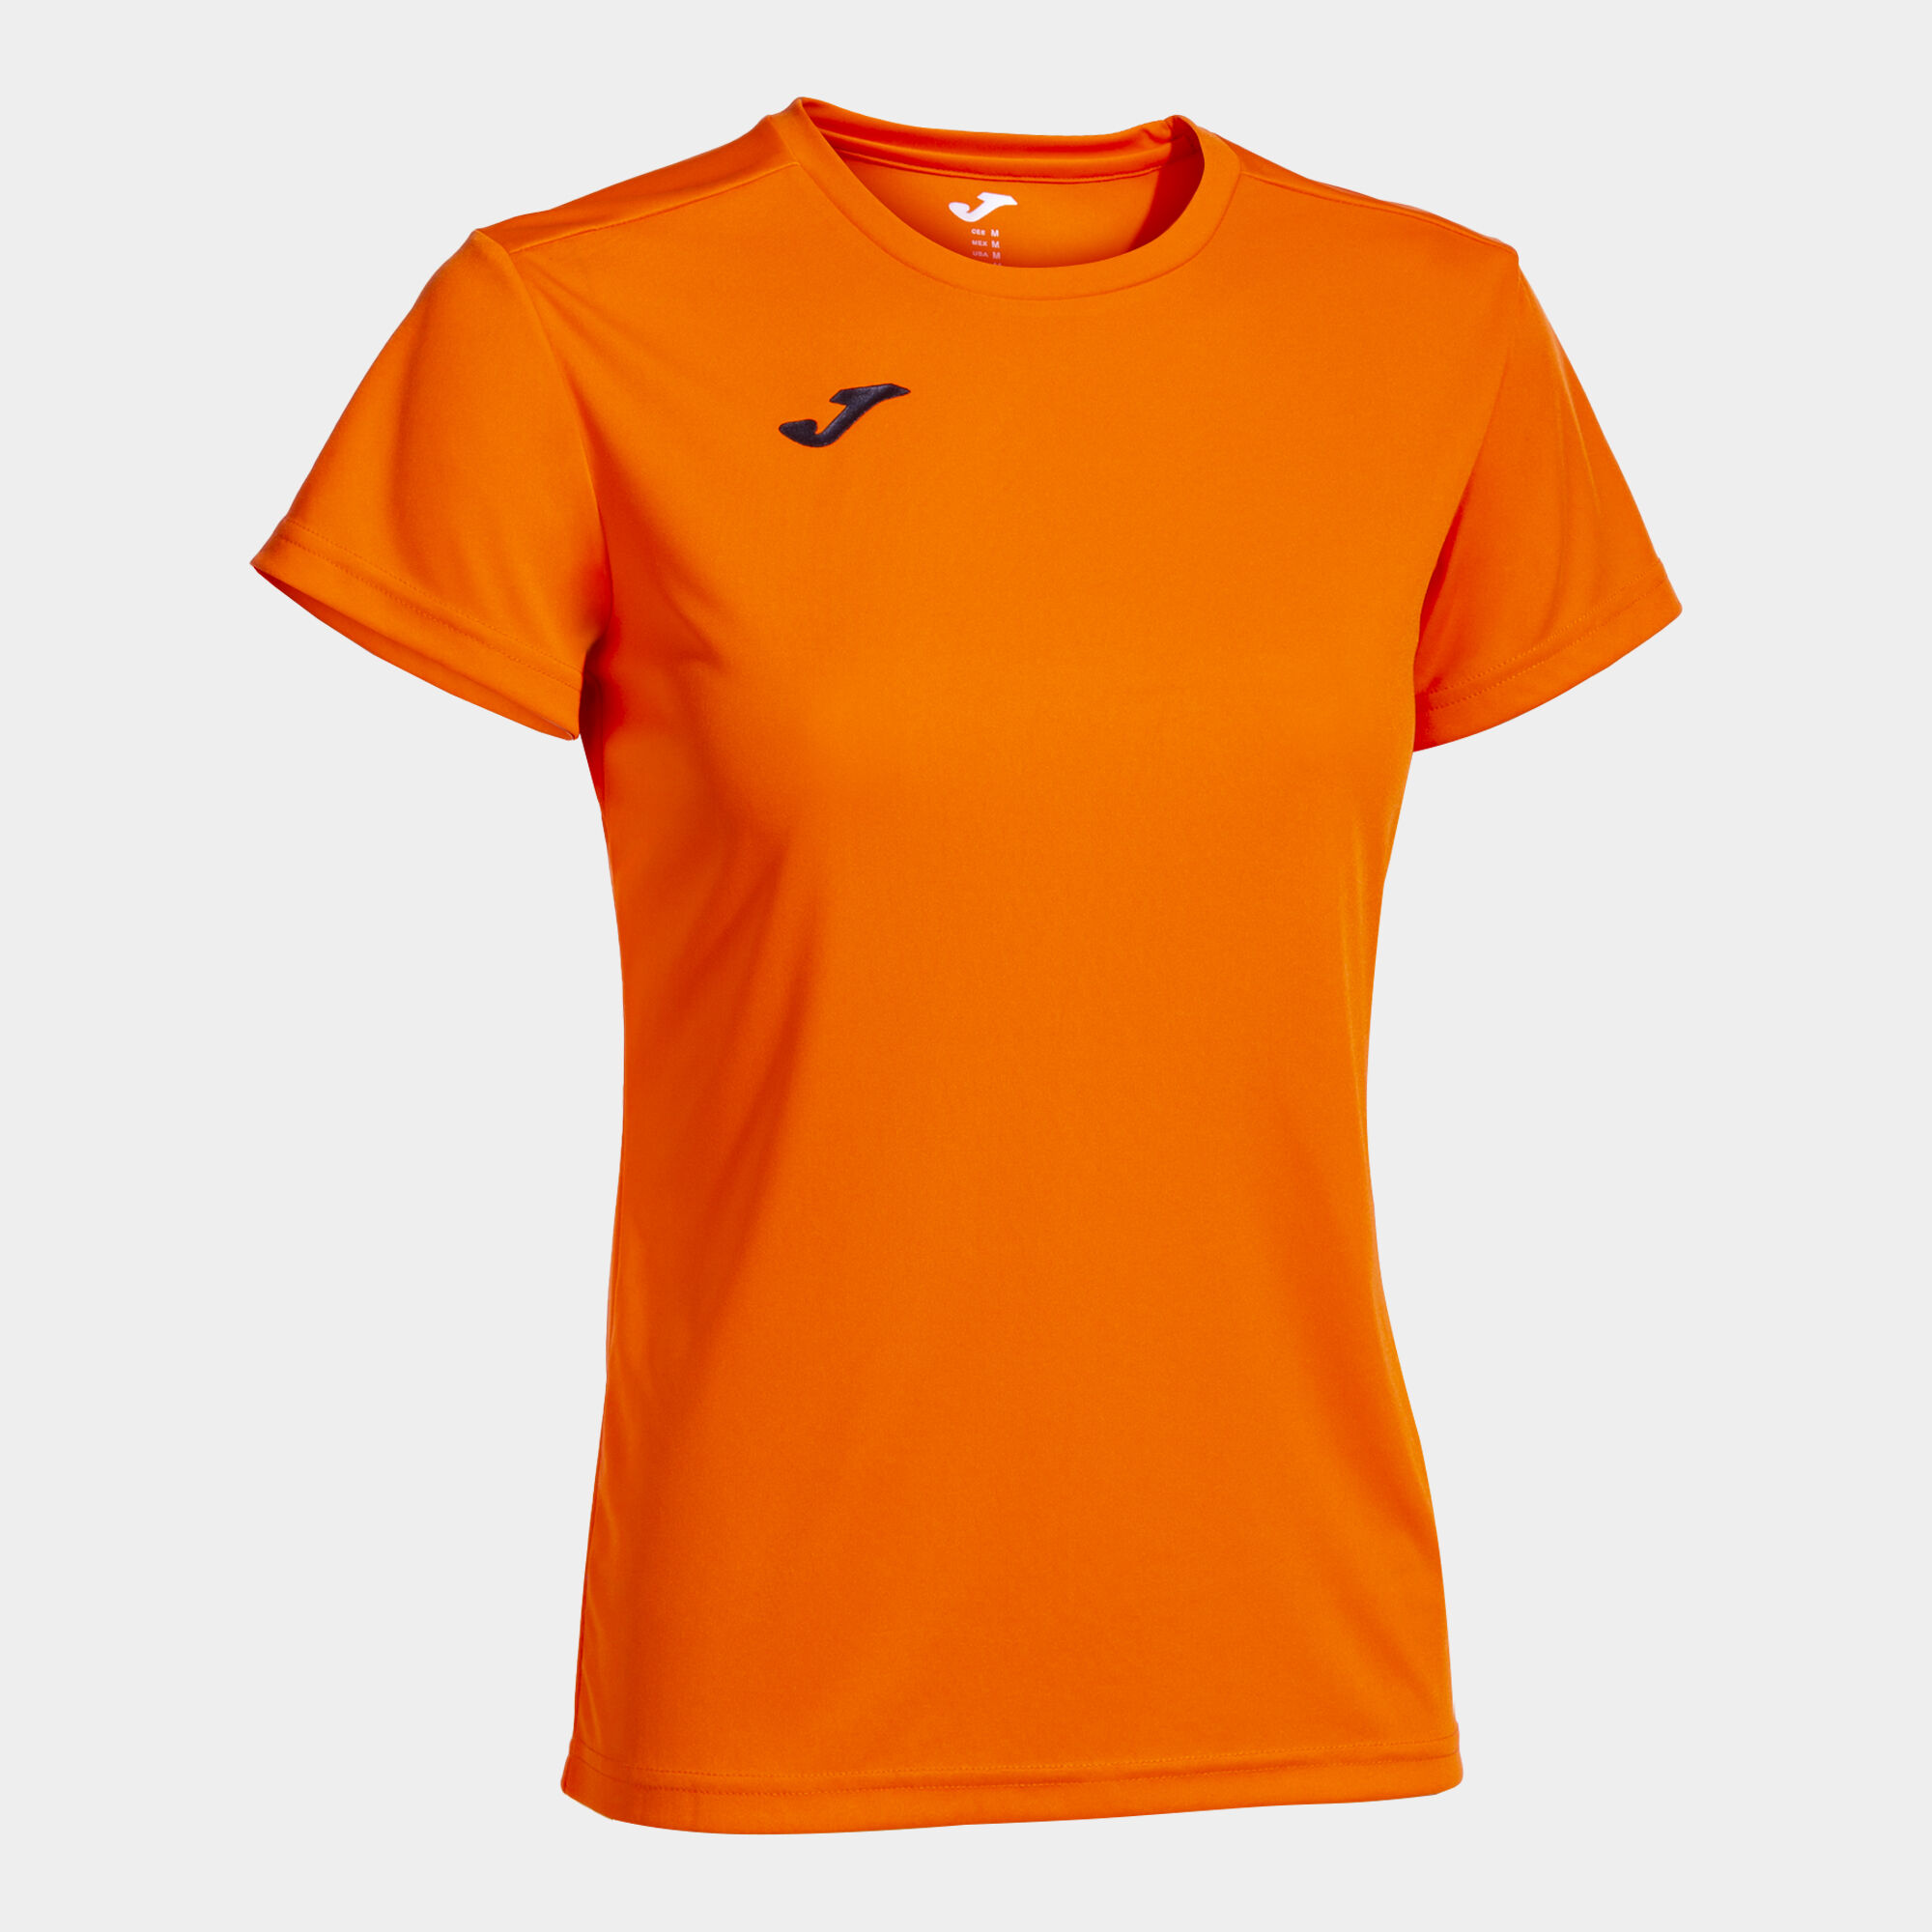 Shirt short sleeve woman Combi orange